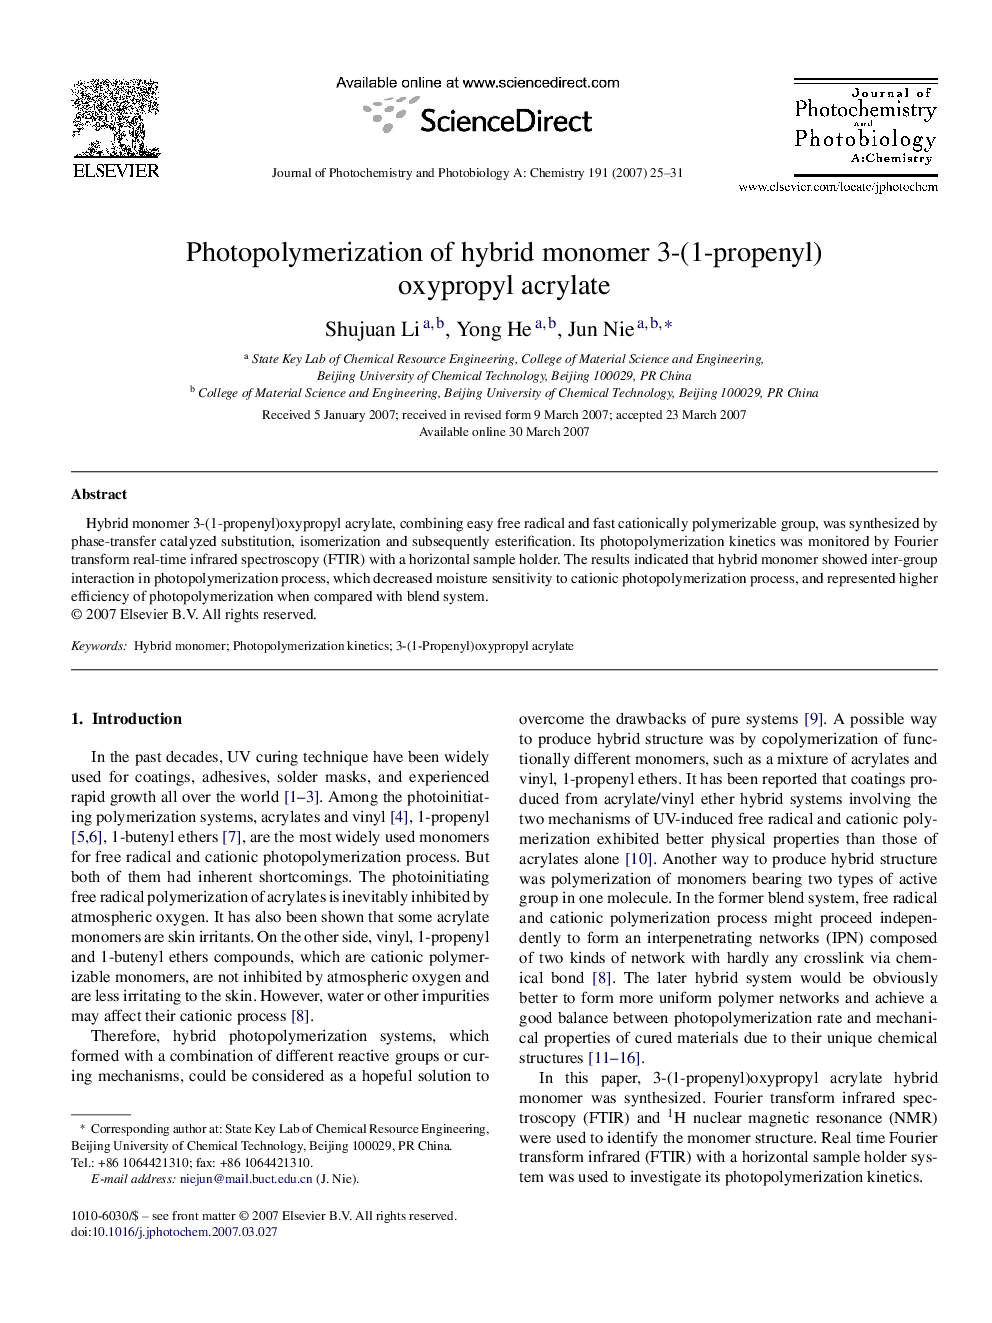 Photopolymerization of hybrid monomer 3-(1-propenyl)oxypropyl acrylate